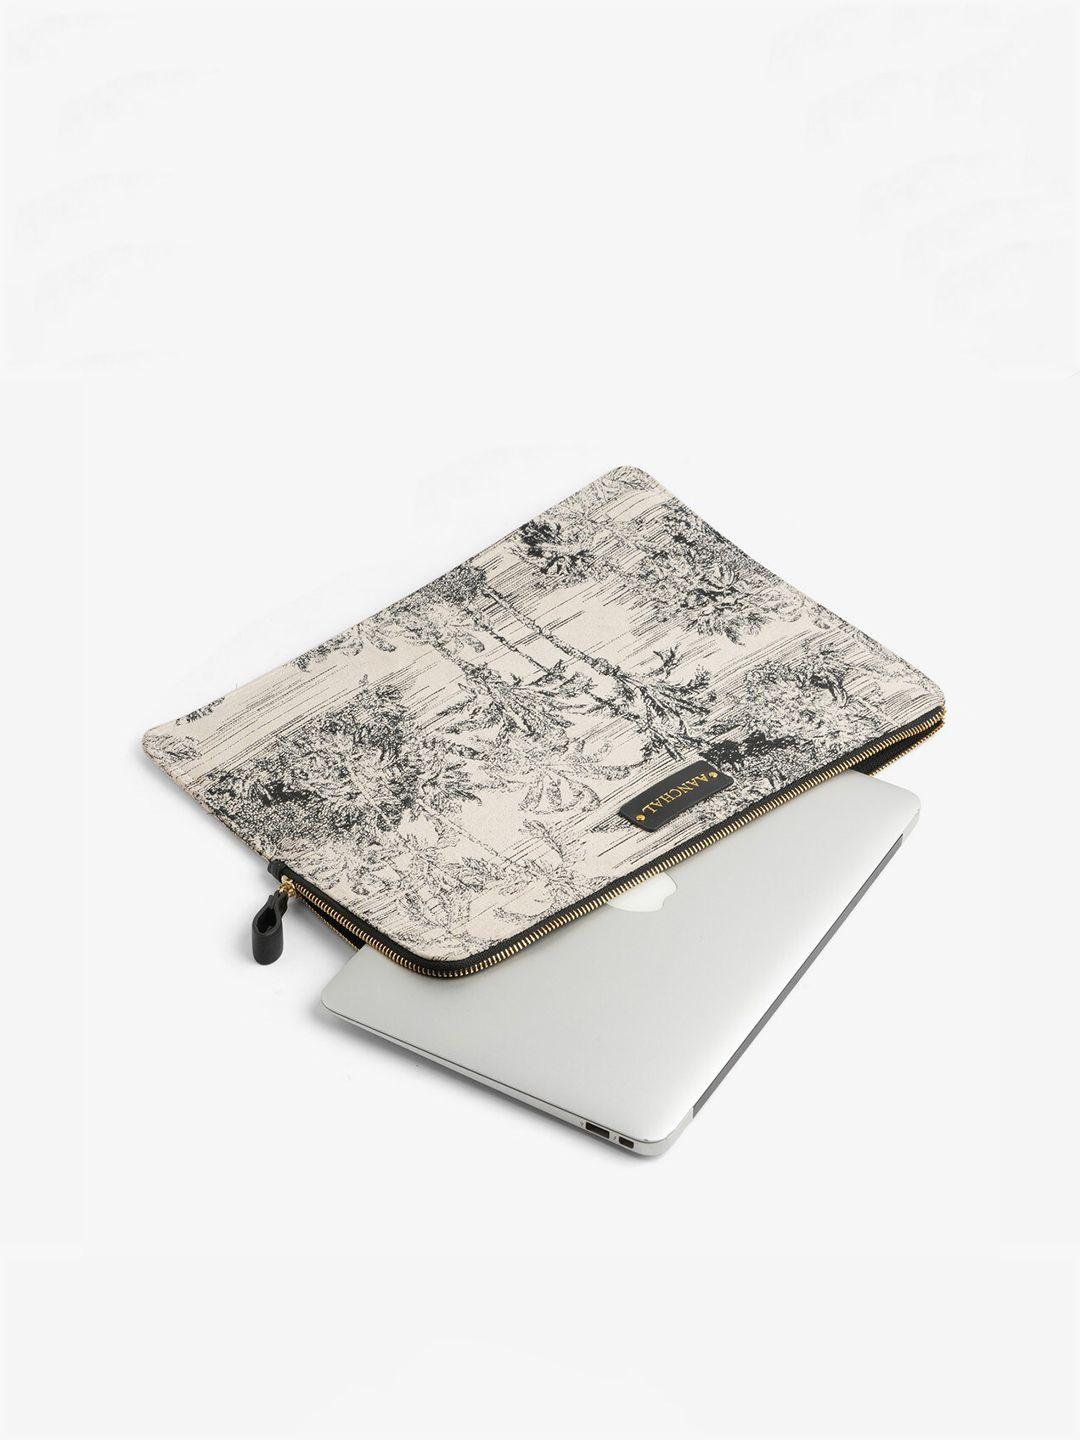 the messy corner fabric textured laptop sleeve